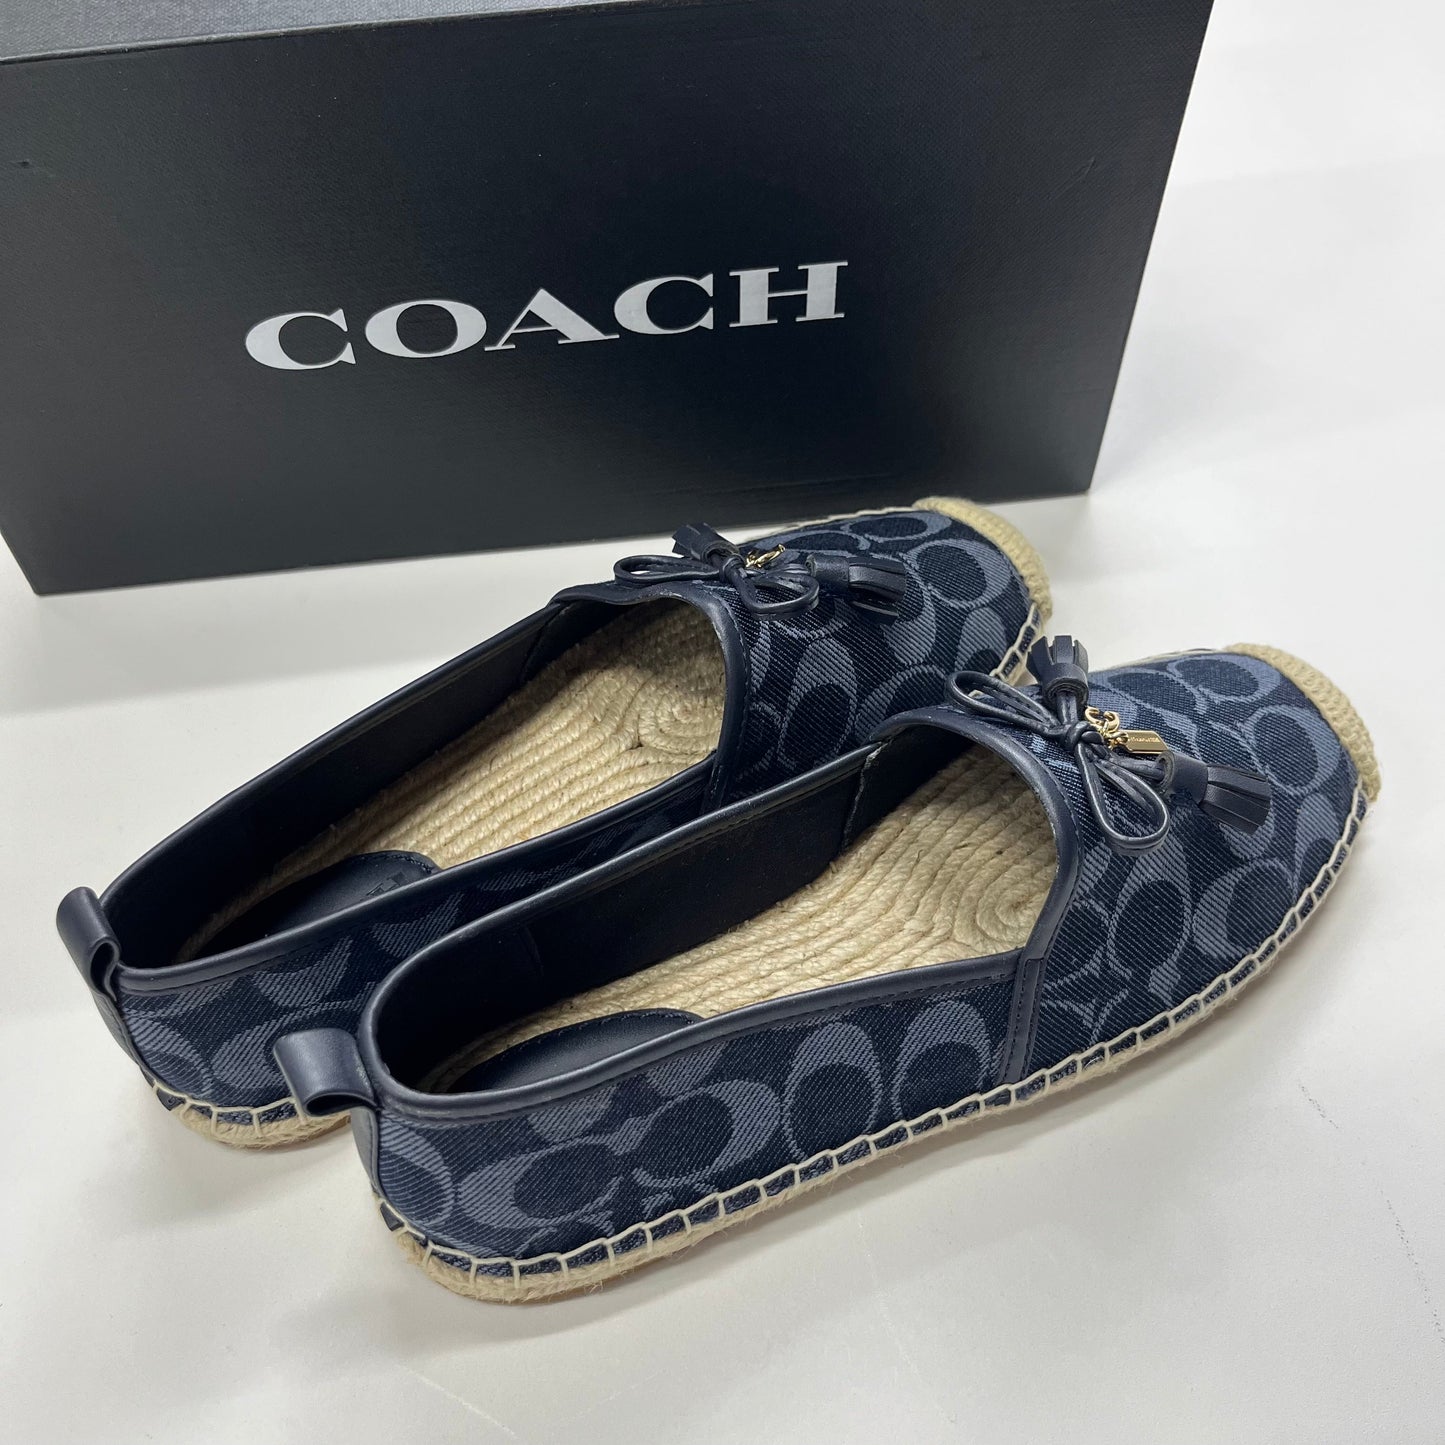 Shoes Flats Espadrille By Coach  Size: 9